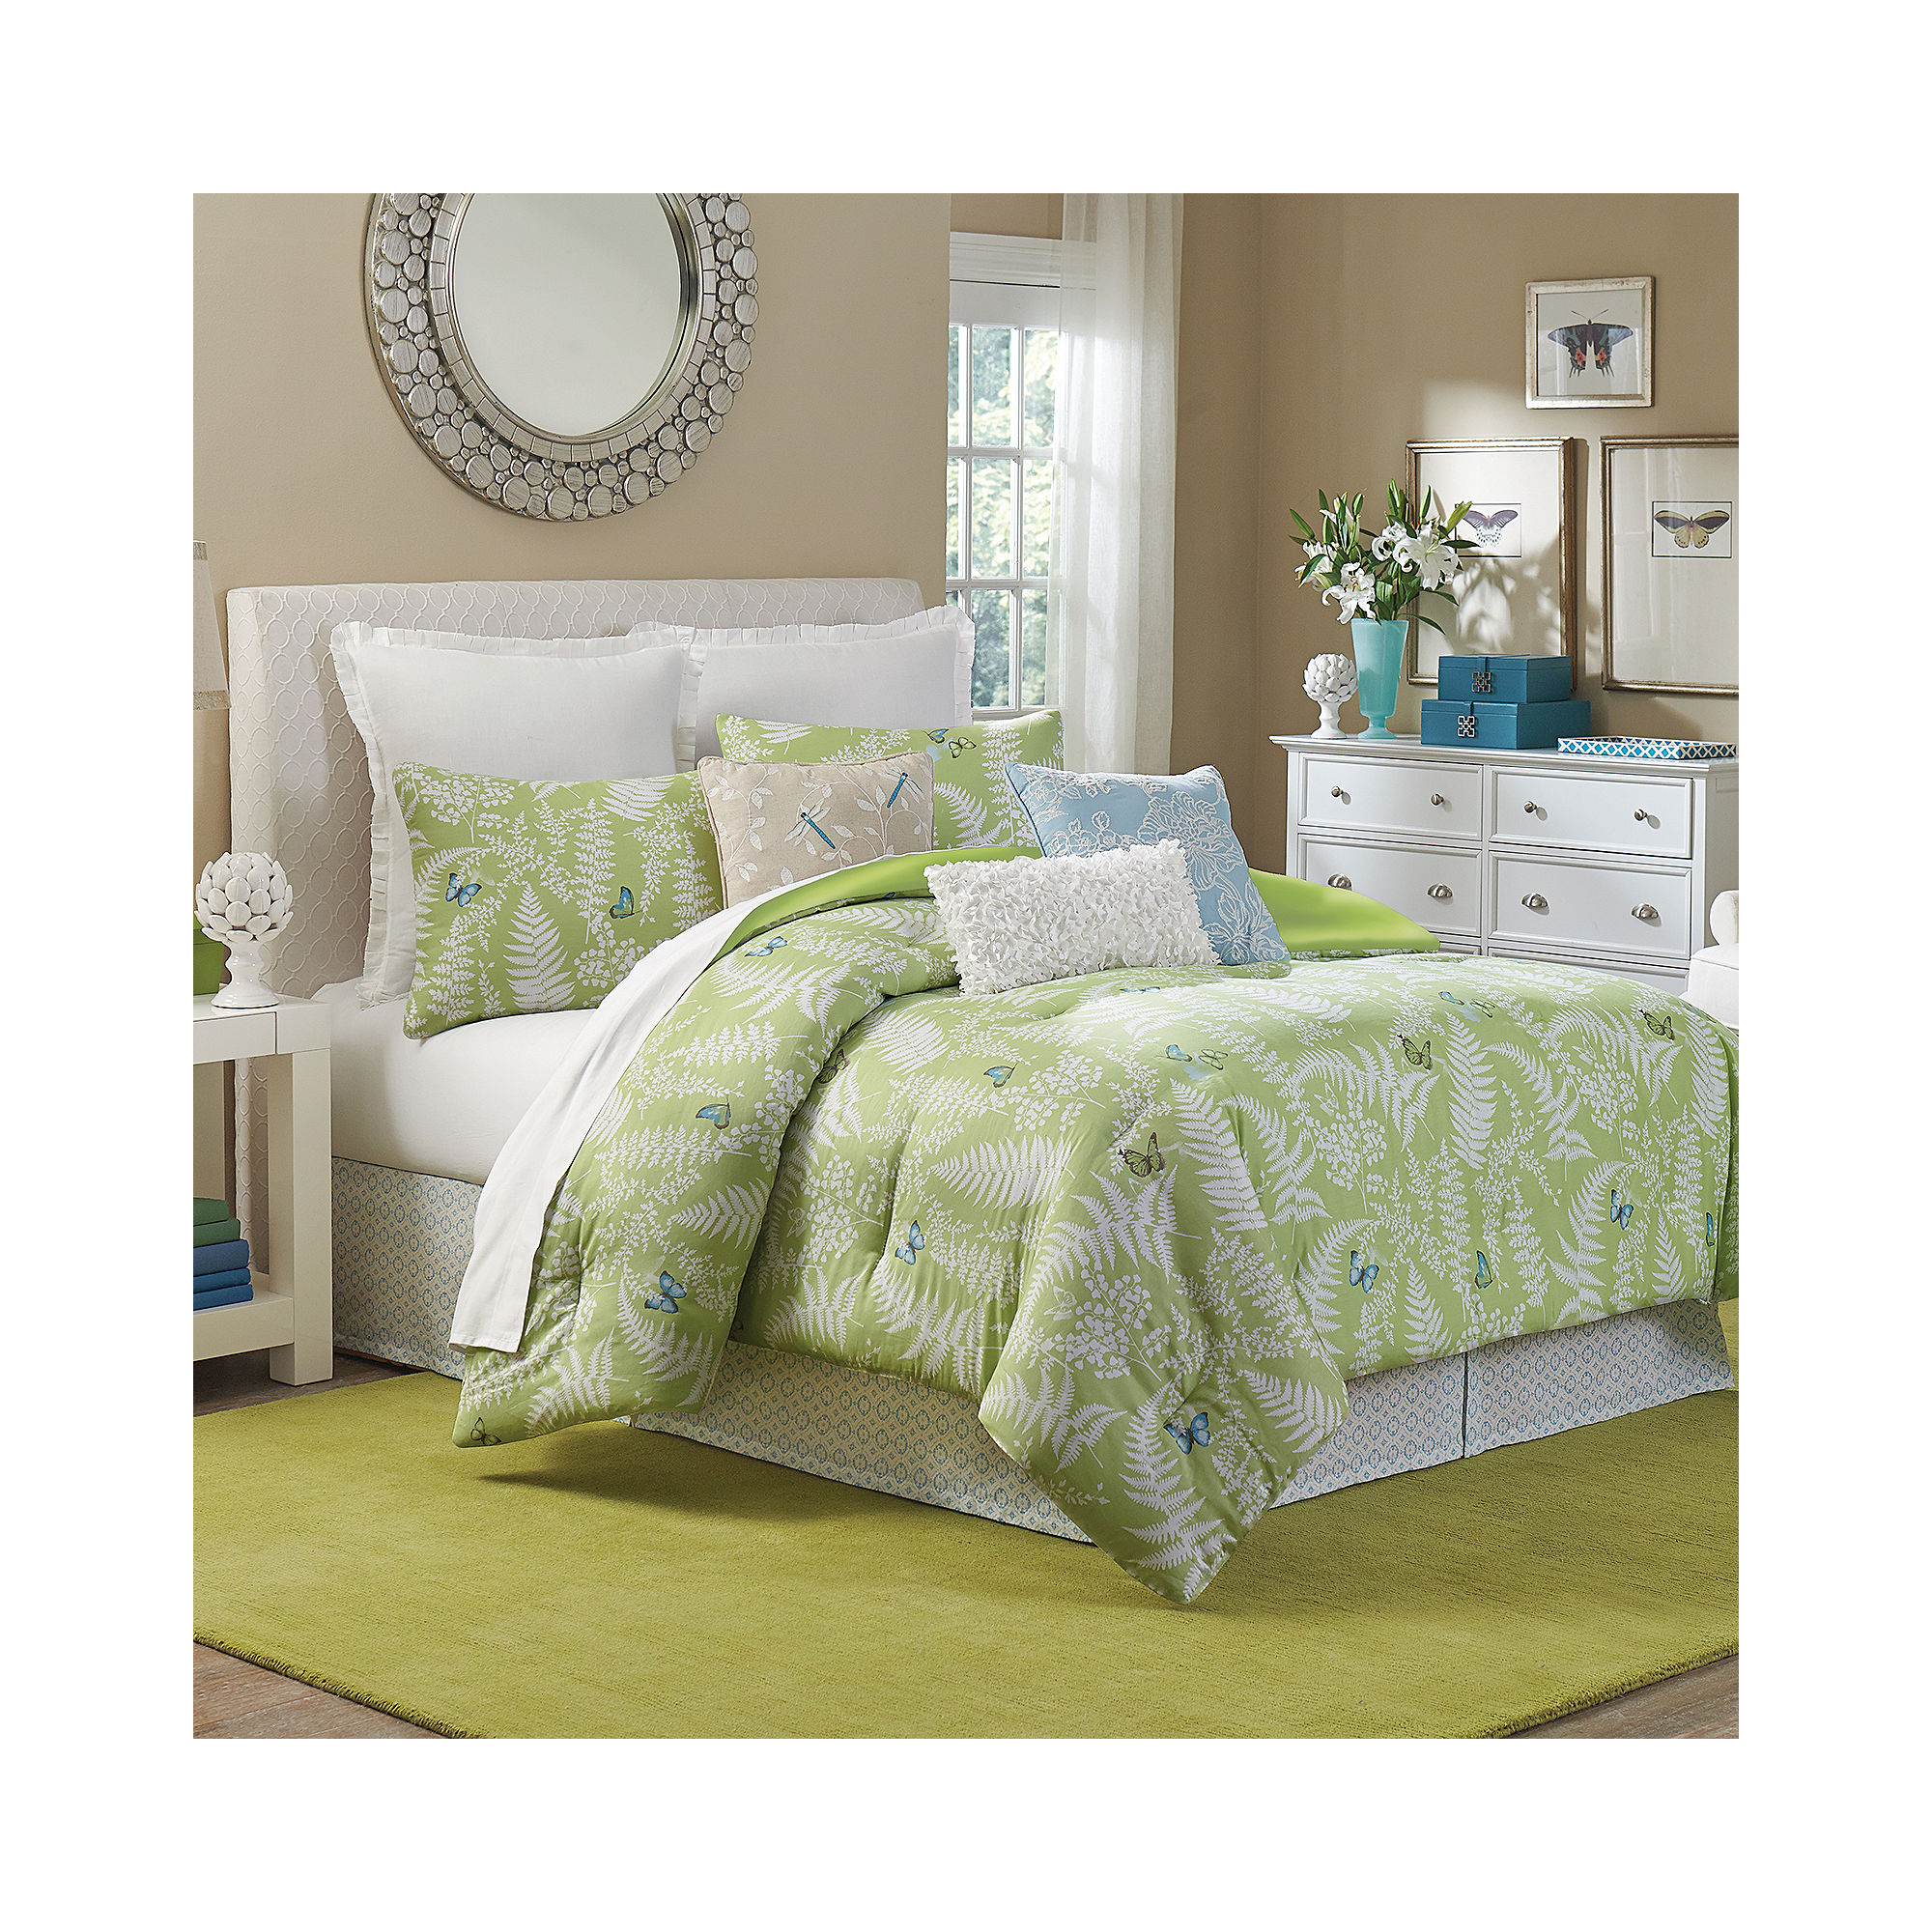 MaryJane's Home Enchanted Grove Comforter Set